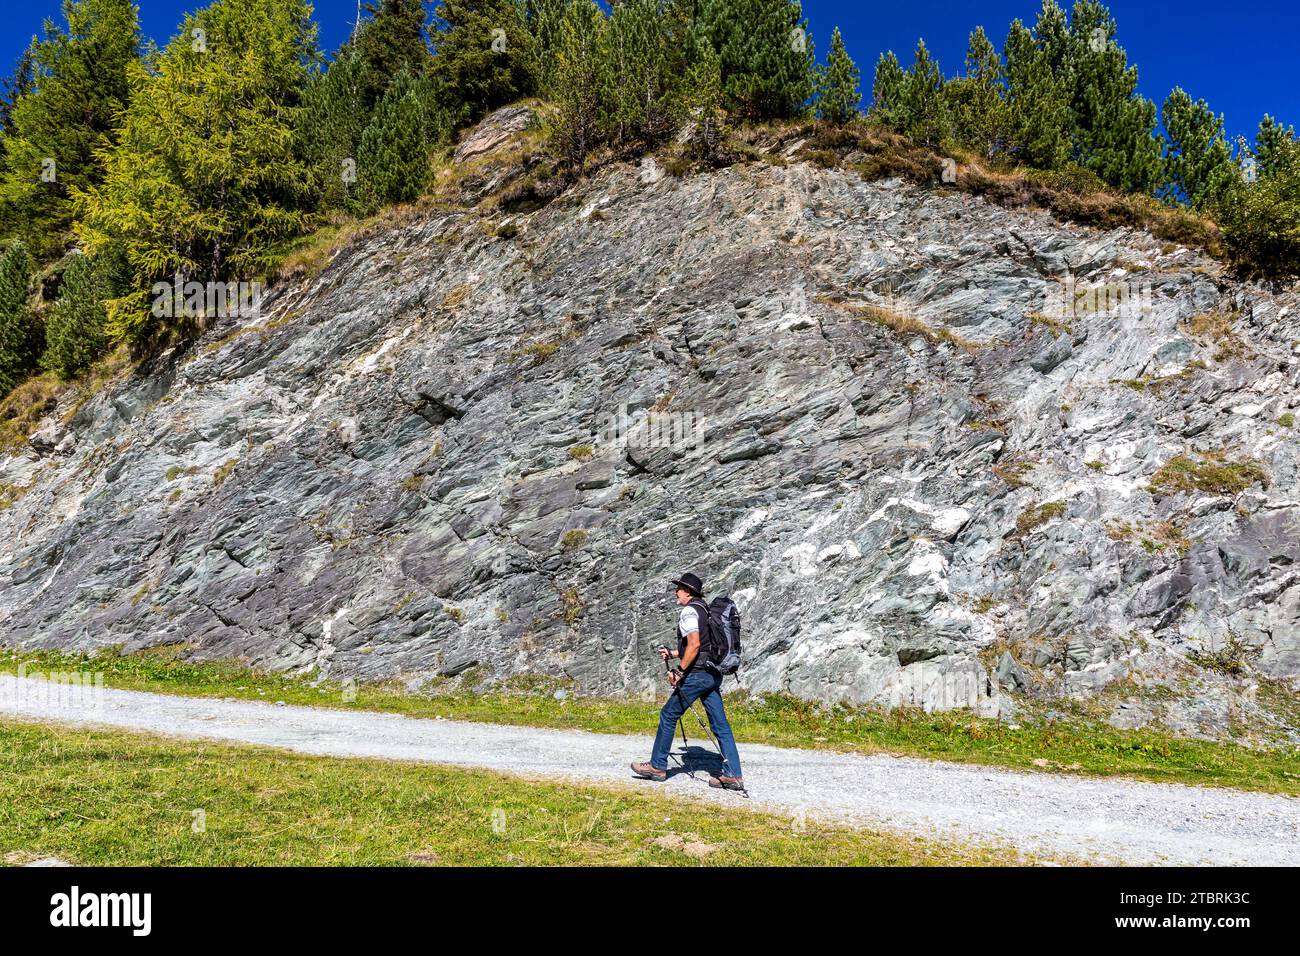 Turista sul sentiero alpino dello Schwarzwand, 2194 m, roccia di mica verdastra scista, Hochalm, Rauris, Raurisertal, Pinzgau, Salzburger Land, Austria Foto Stock